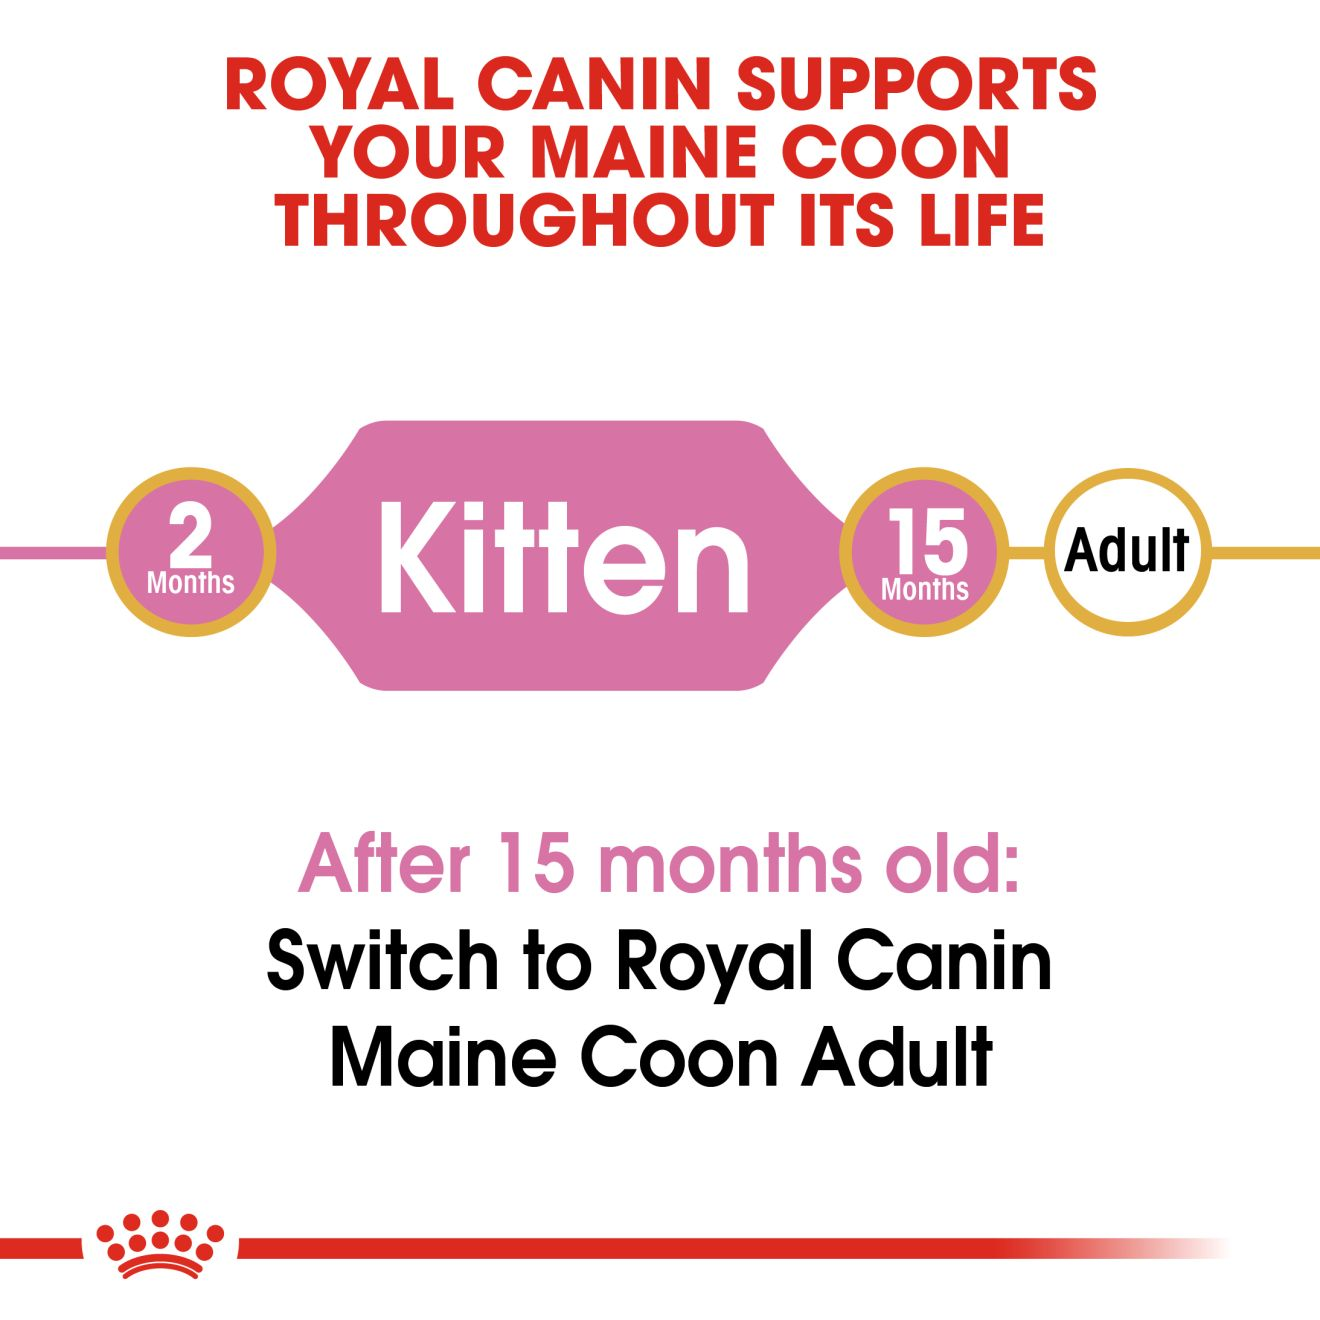 kitten maine coon royal canin